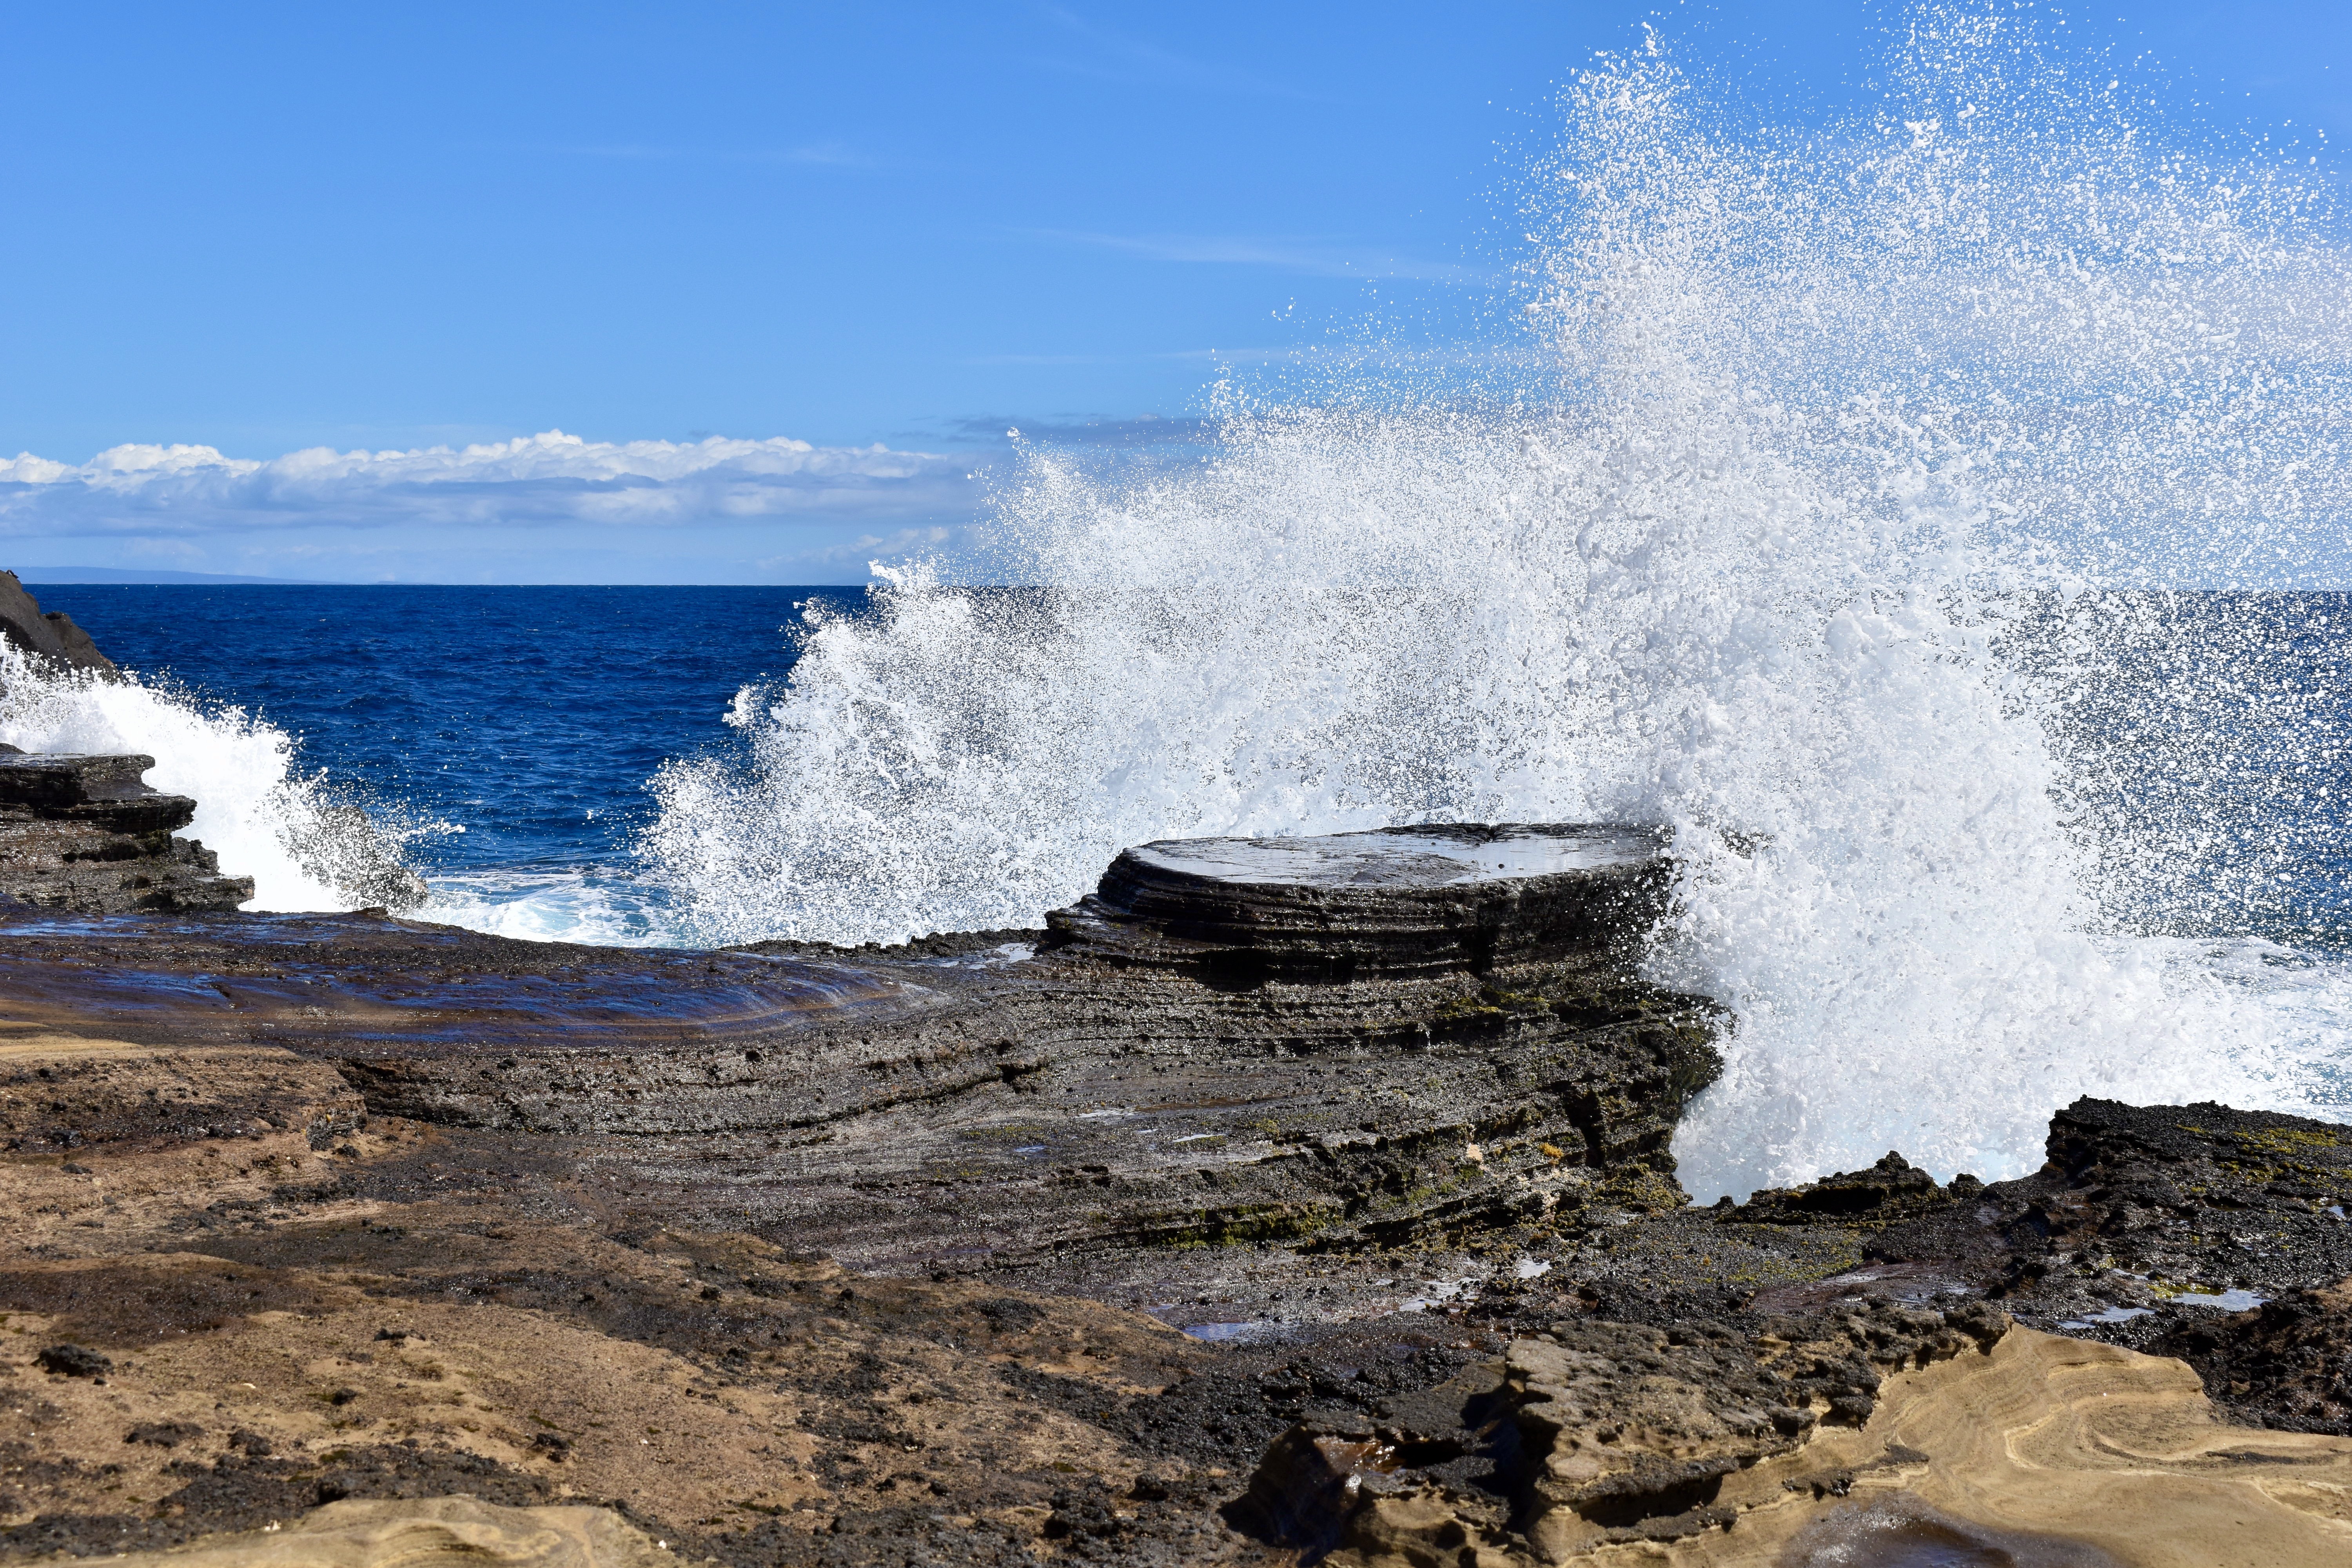 Ocean waves crashing on the ledge rocks